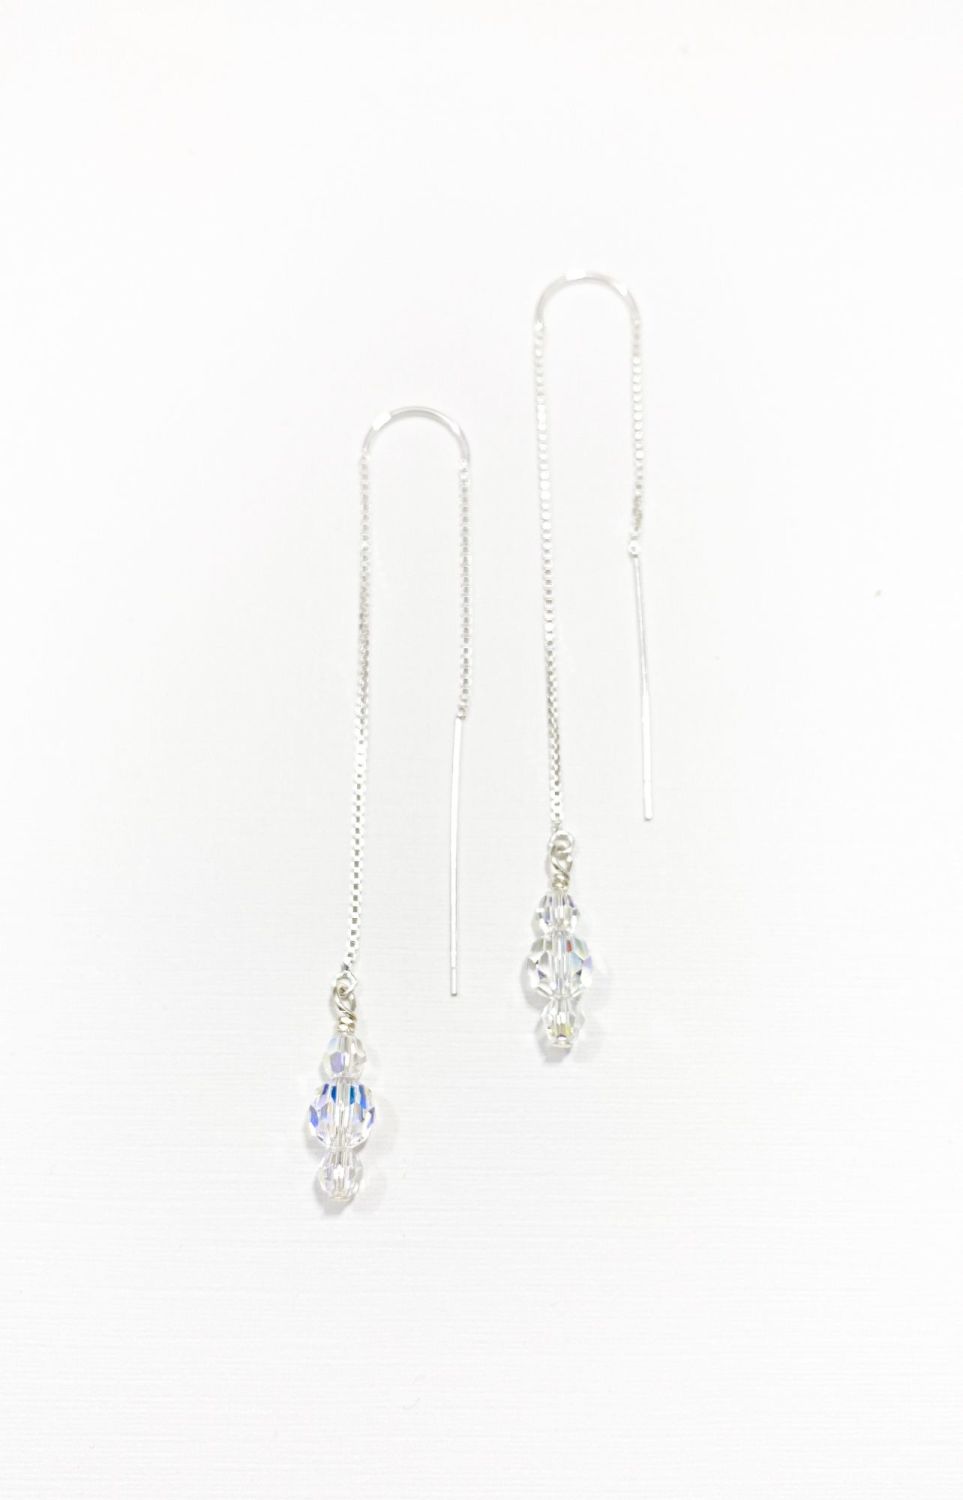 Earrings - Threader Style - Swarovski Crystal